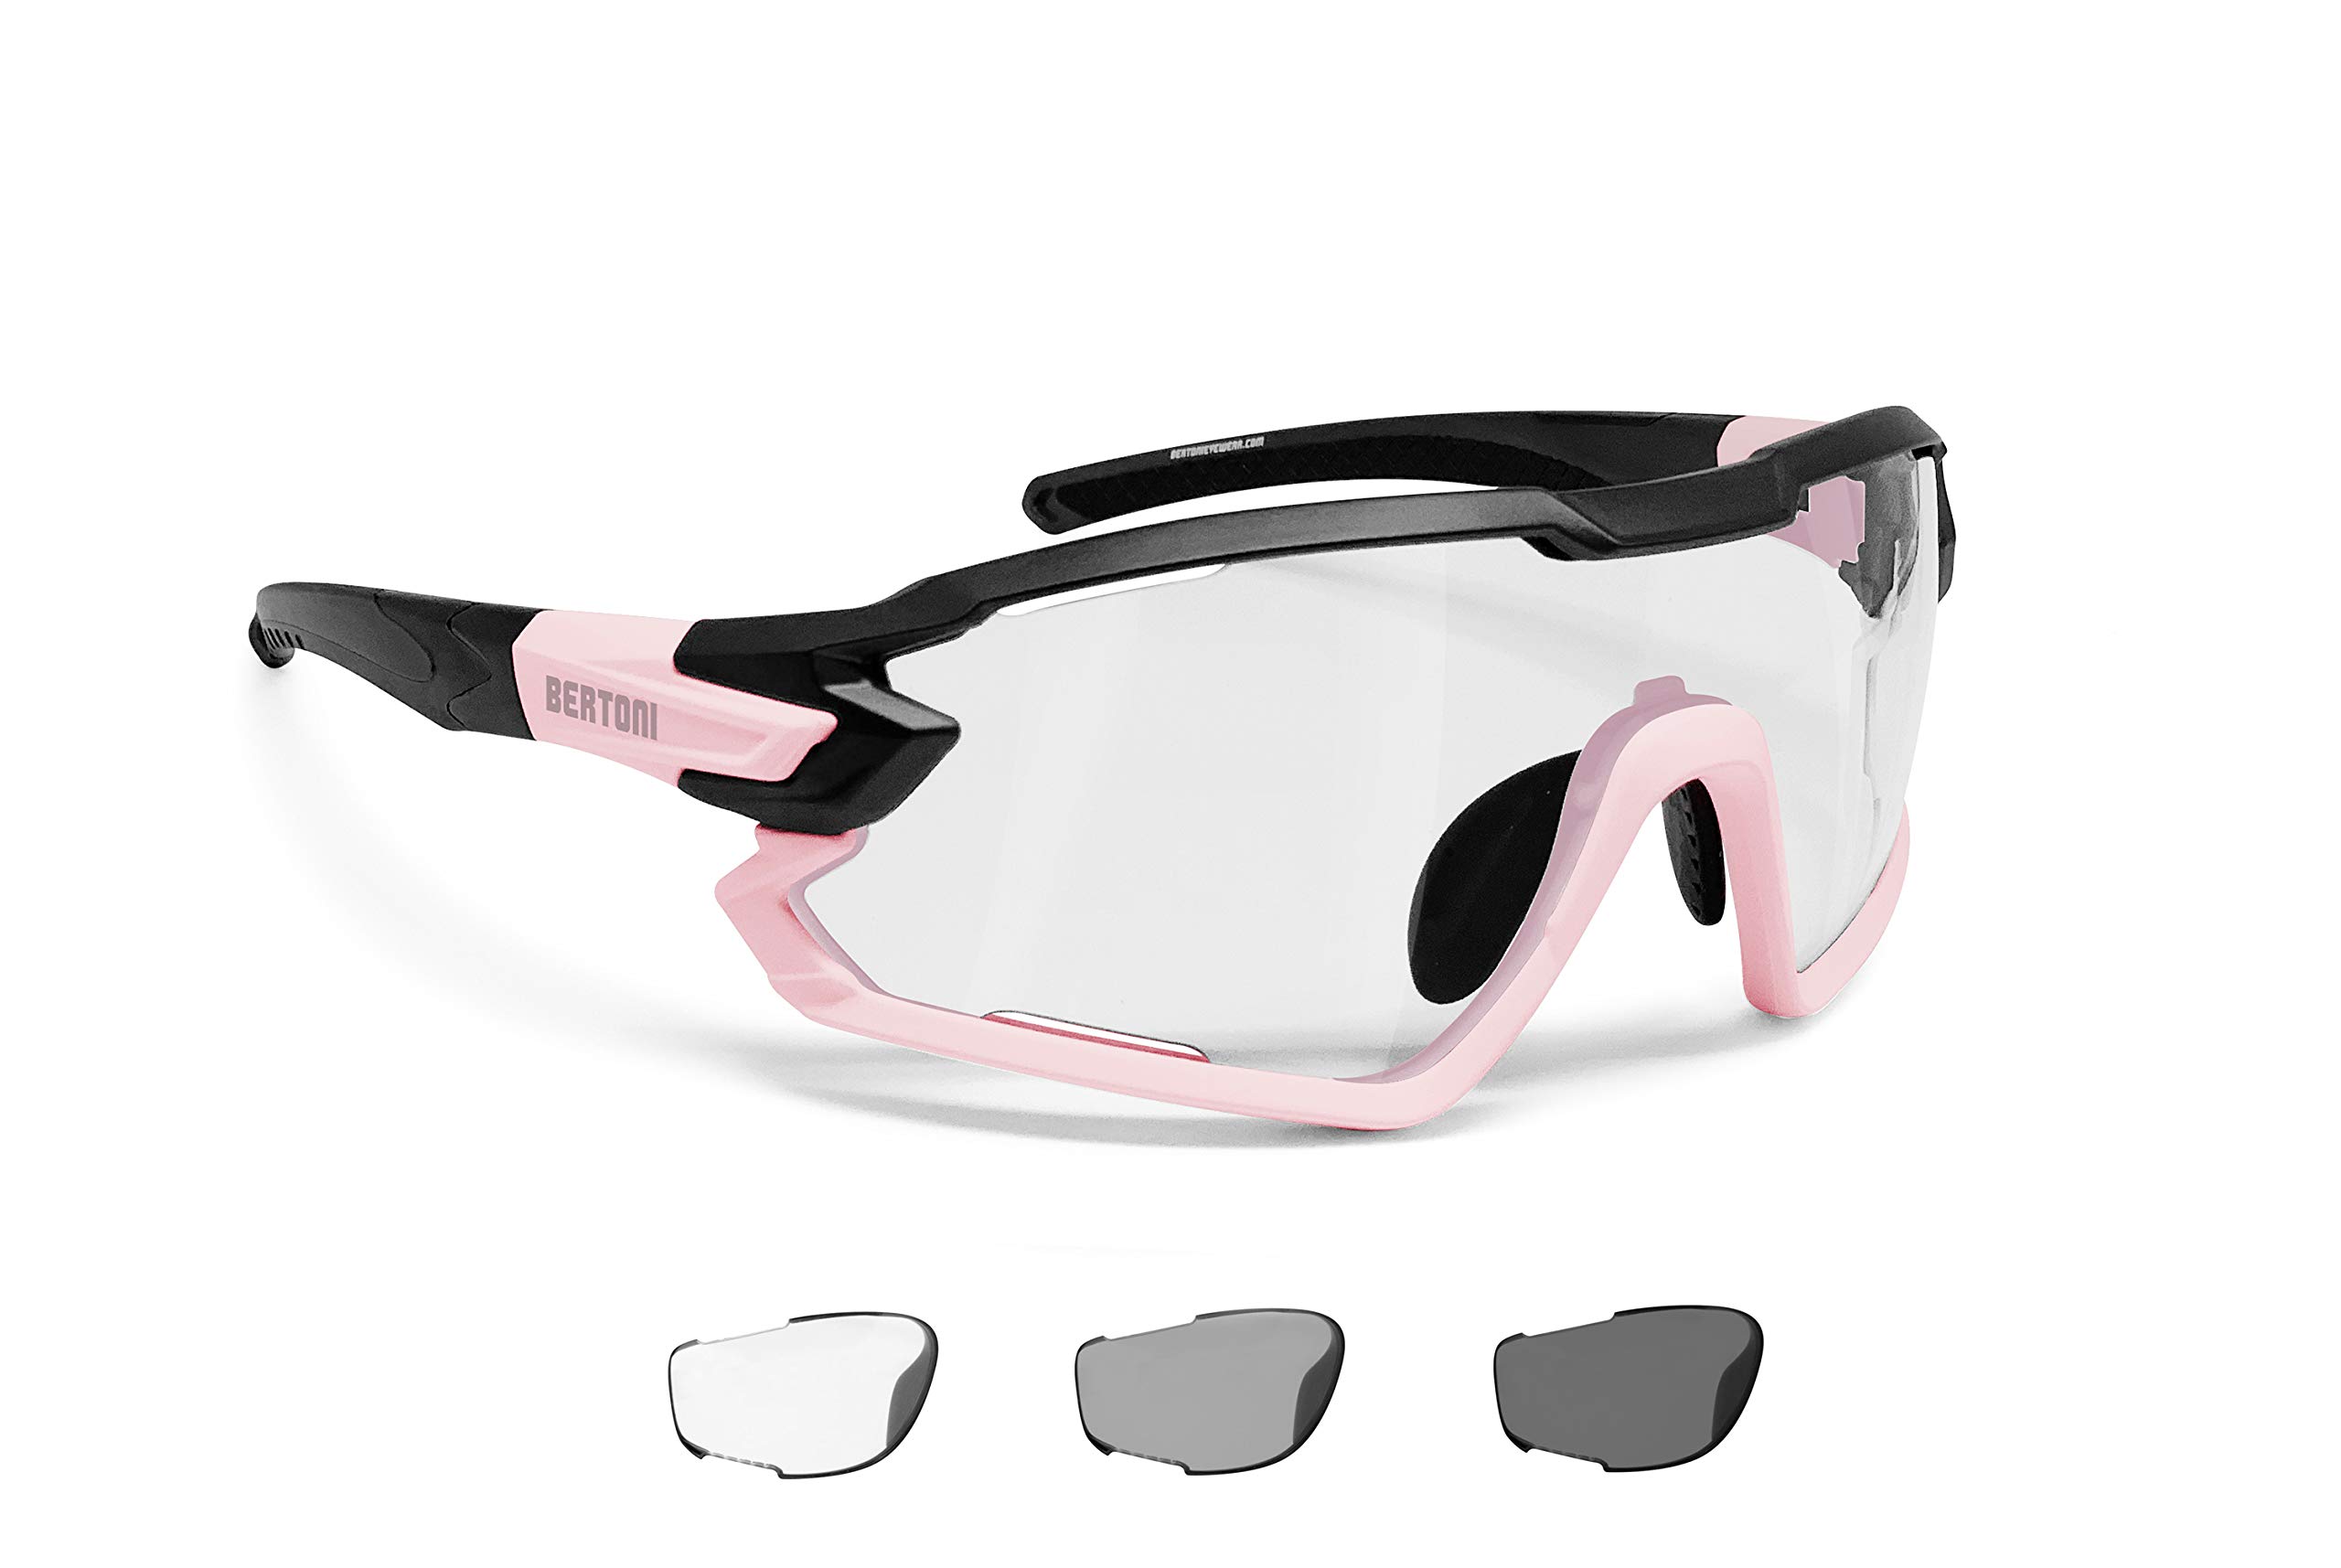 BERTONI Fahrradbrille Sport Sonnenbrille Radbrille MTB mit Sehstärke für Brillenträger mod. QUASAR (Schwartz-Rosa/Selbsttönende)